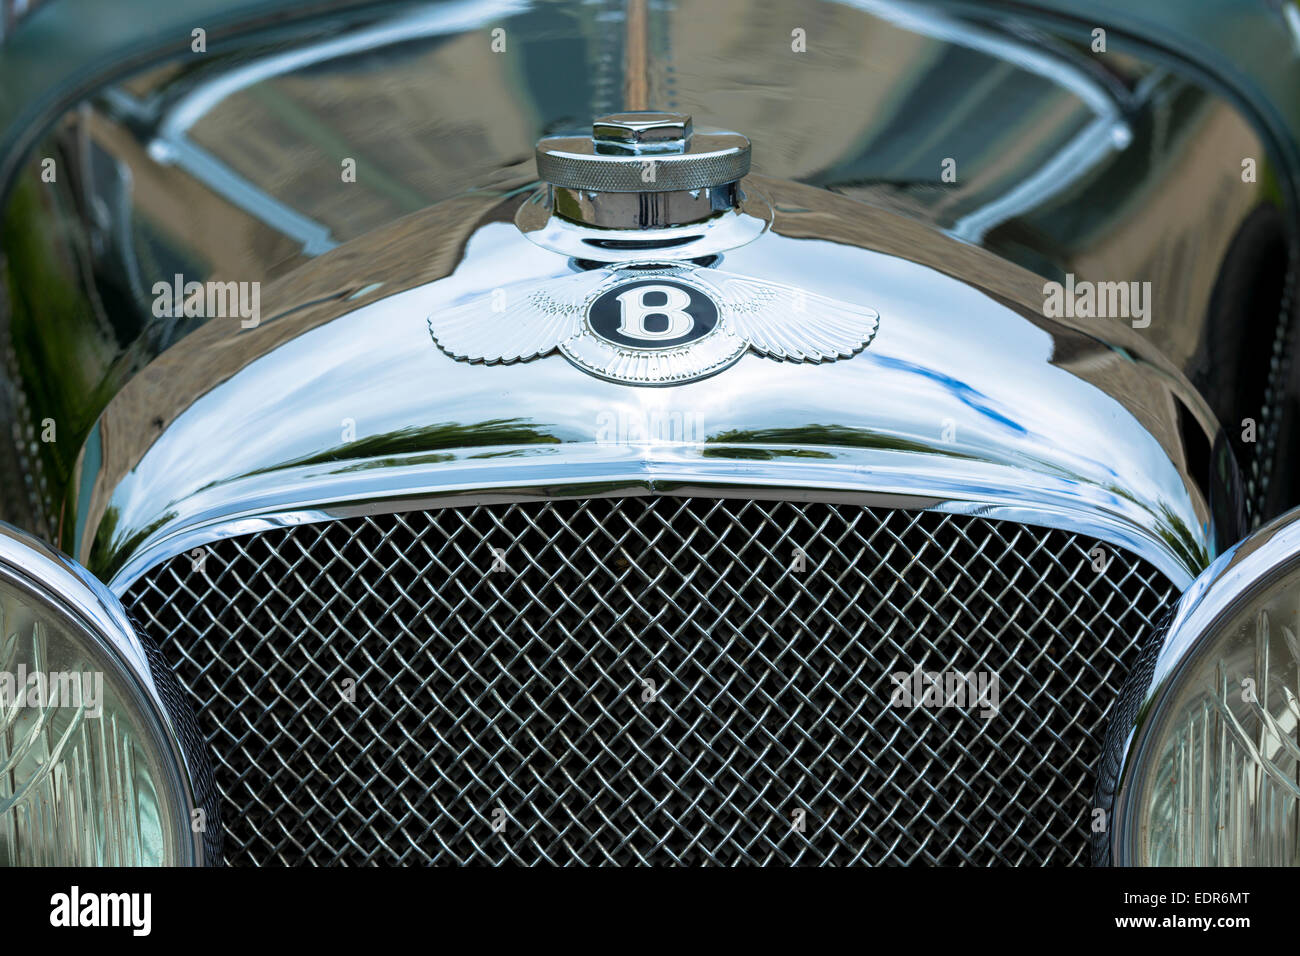 Oldtimer Bentley 4,5 Liter Luxus-Auto Baujahr 1929 mit AA - Automobilclub - RAC - Royal Automobile Club - Stockfoto